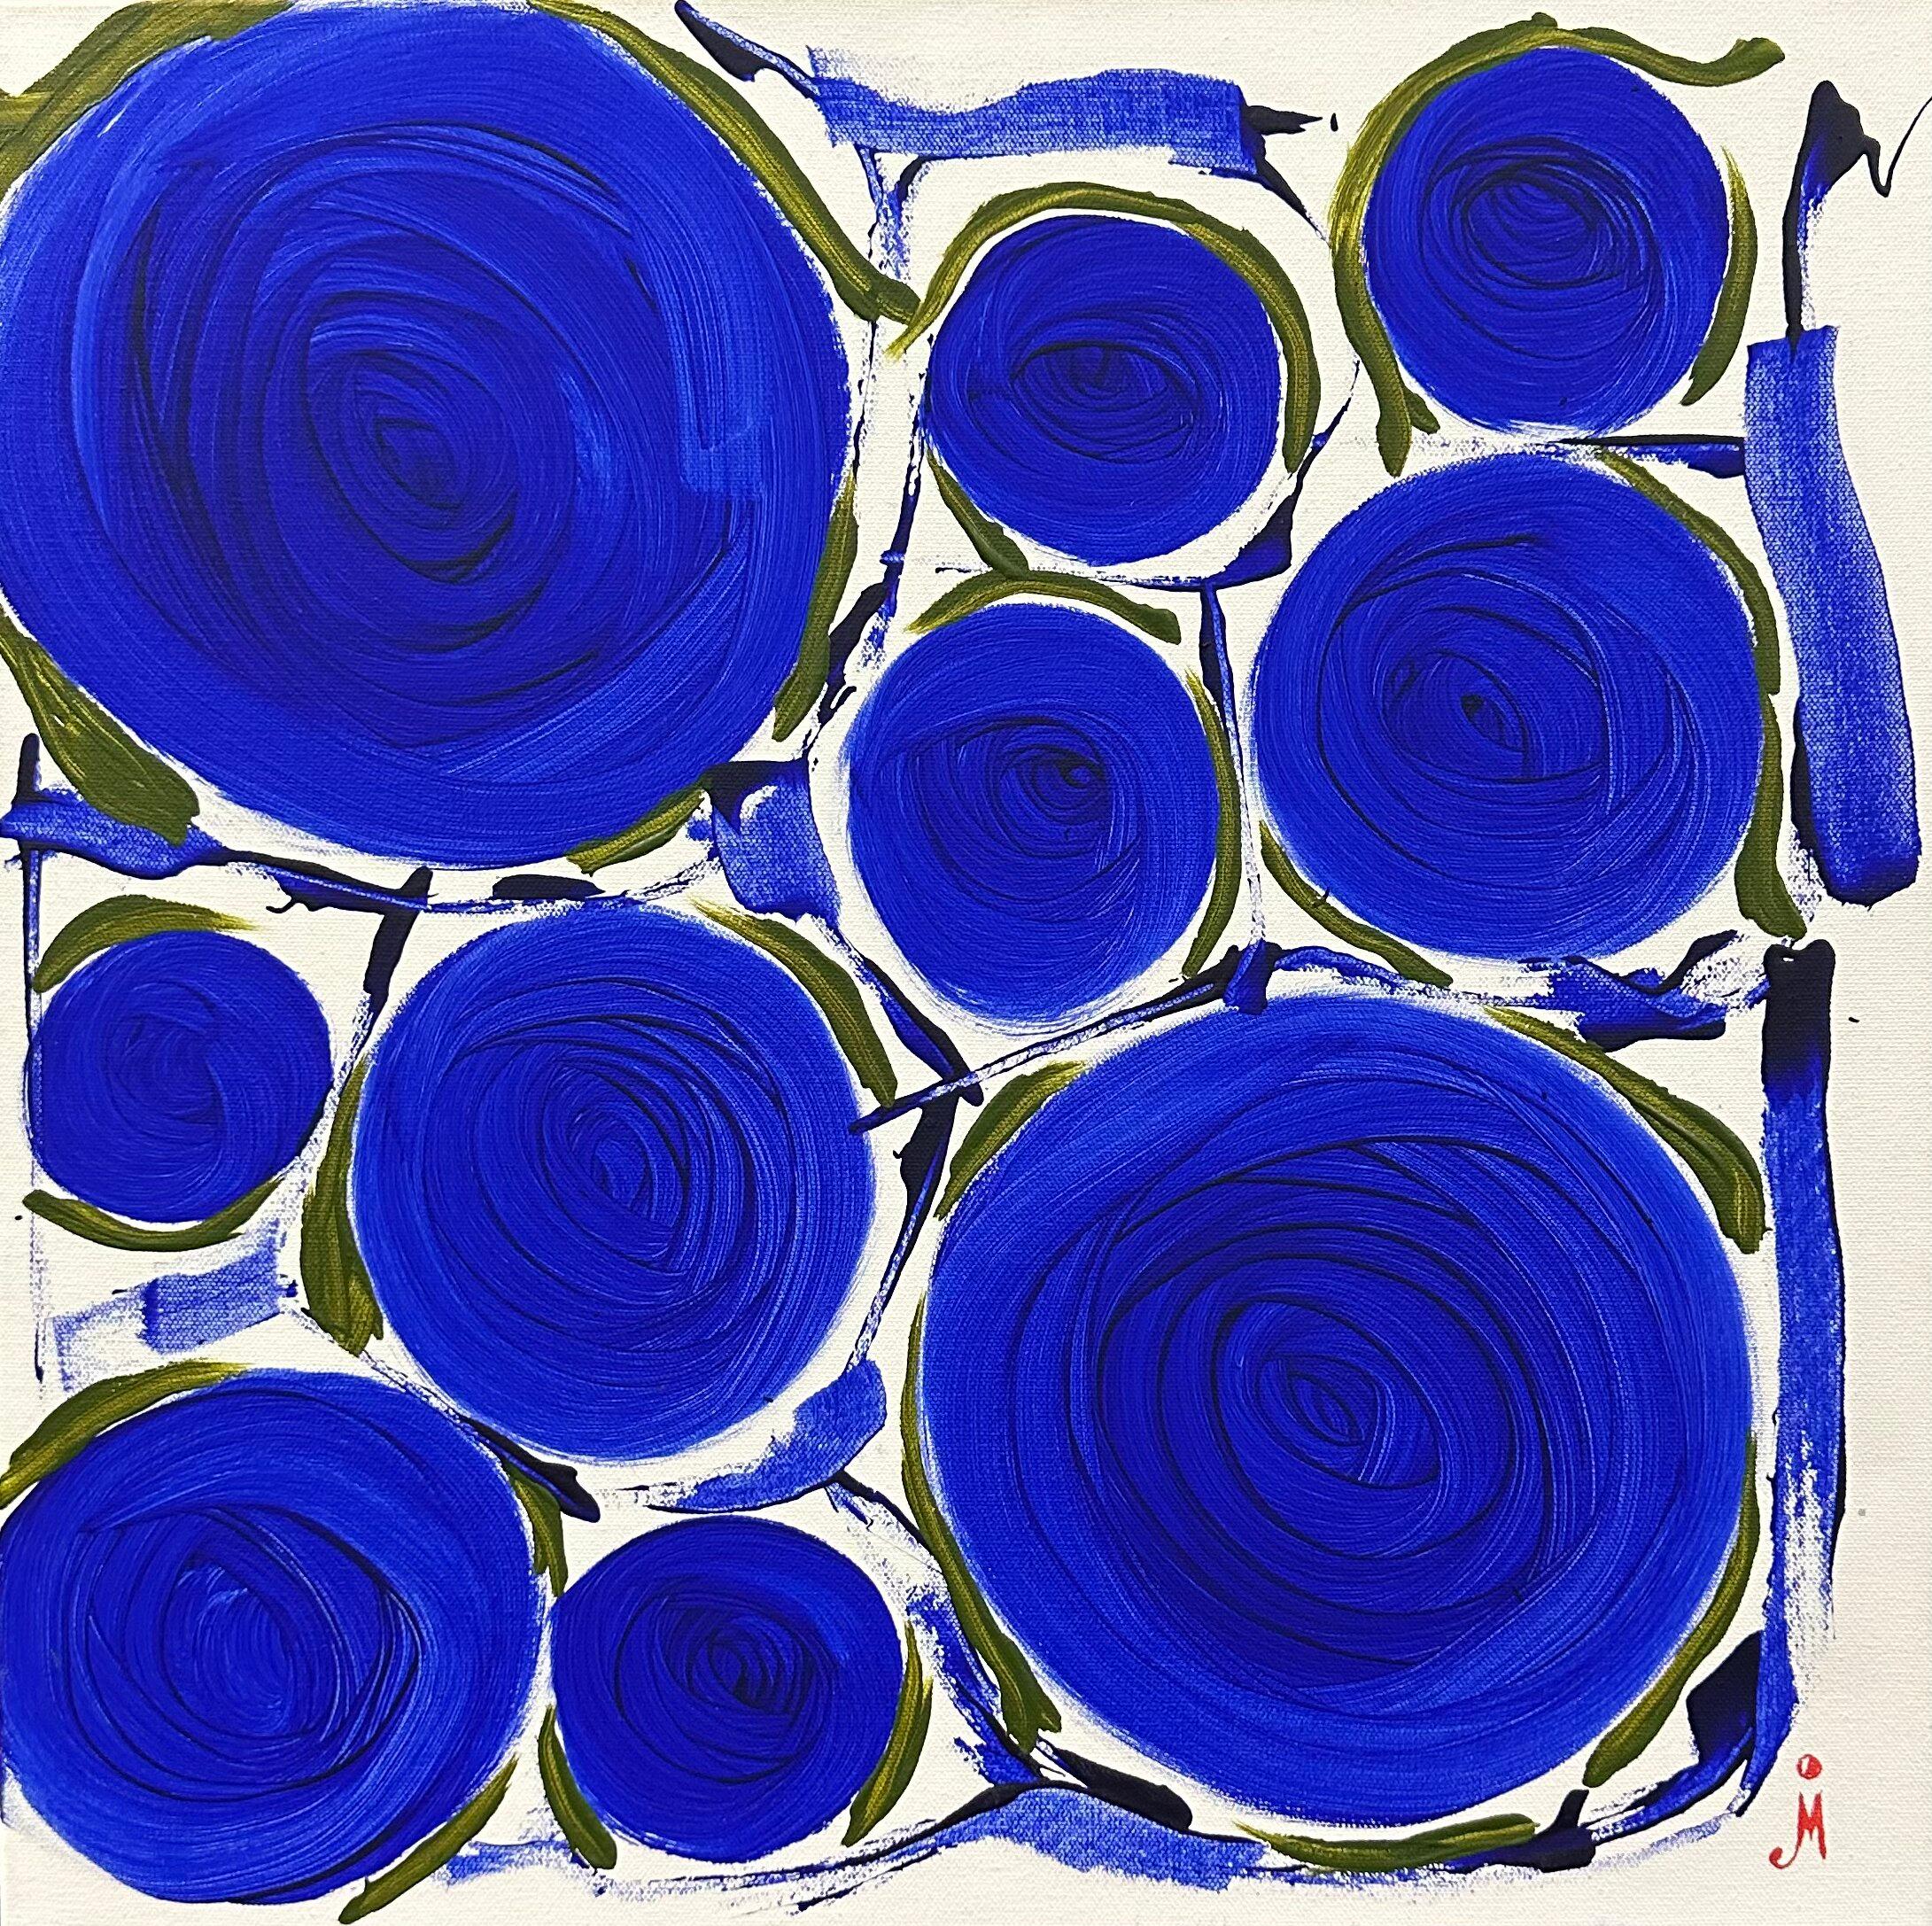 Blaue Rosen #2 – Painting von J. Oscar Molina